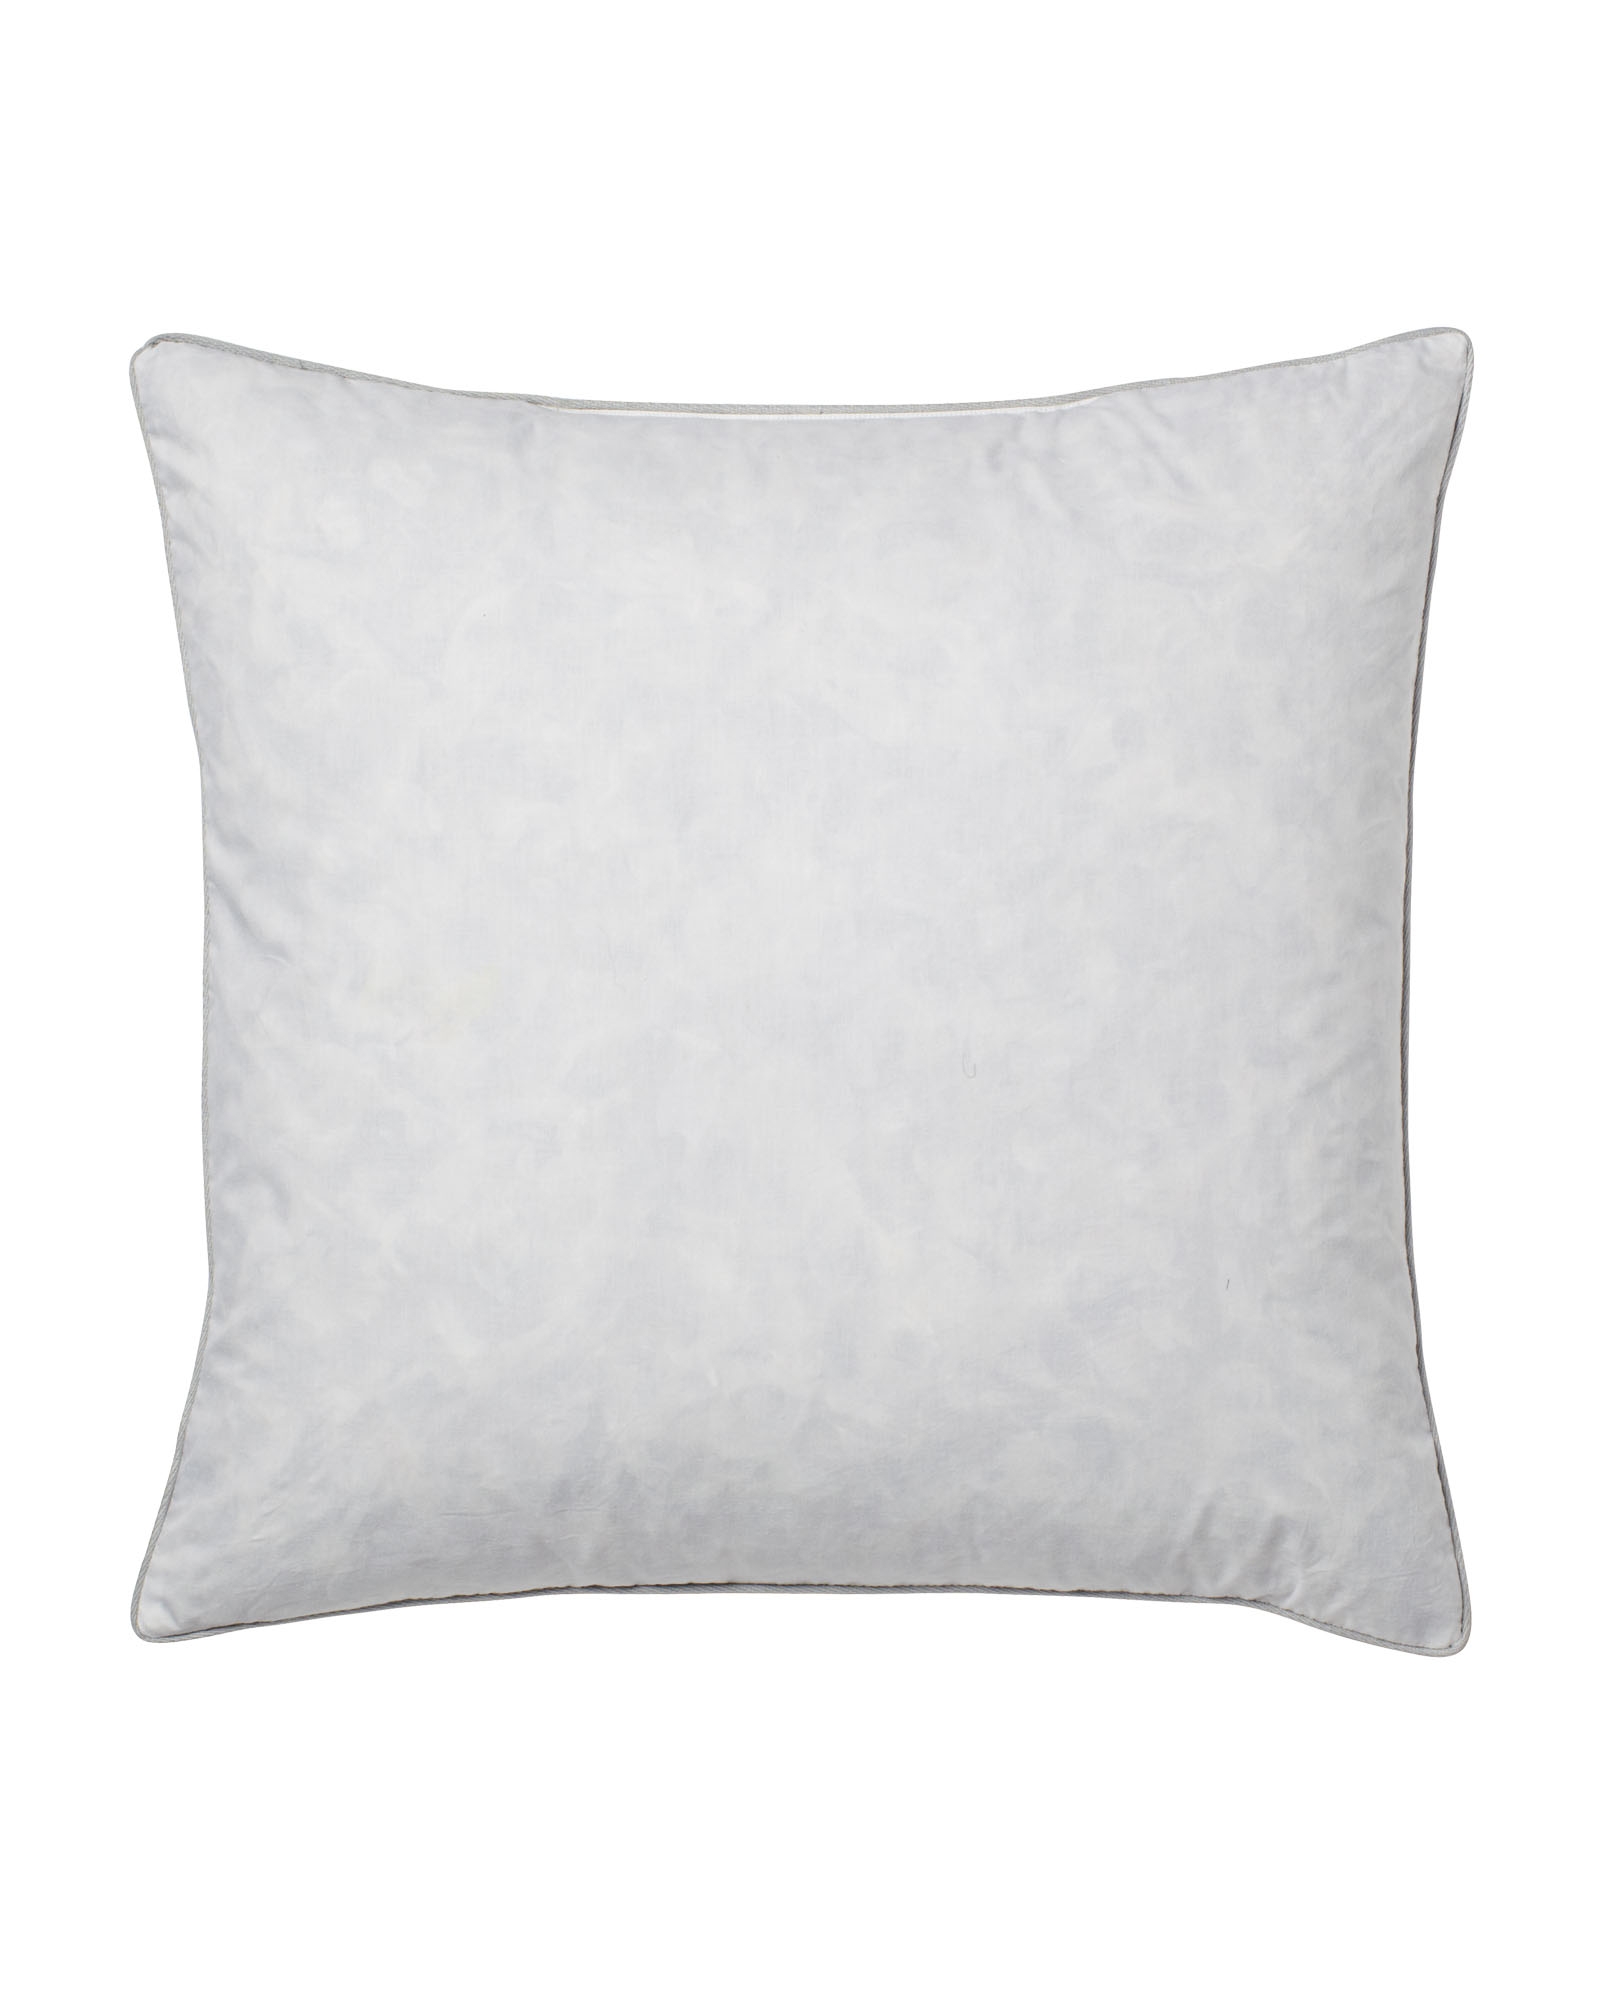 Outdoor Pillow Insert10 - Image 0